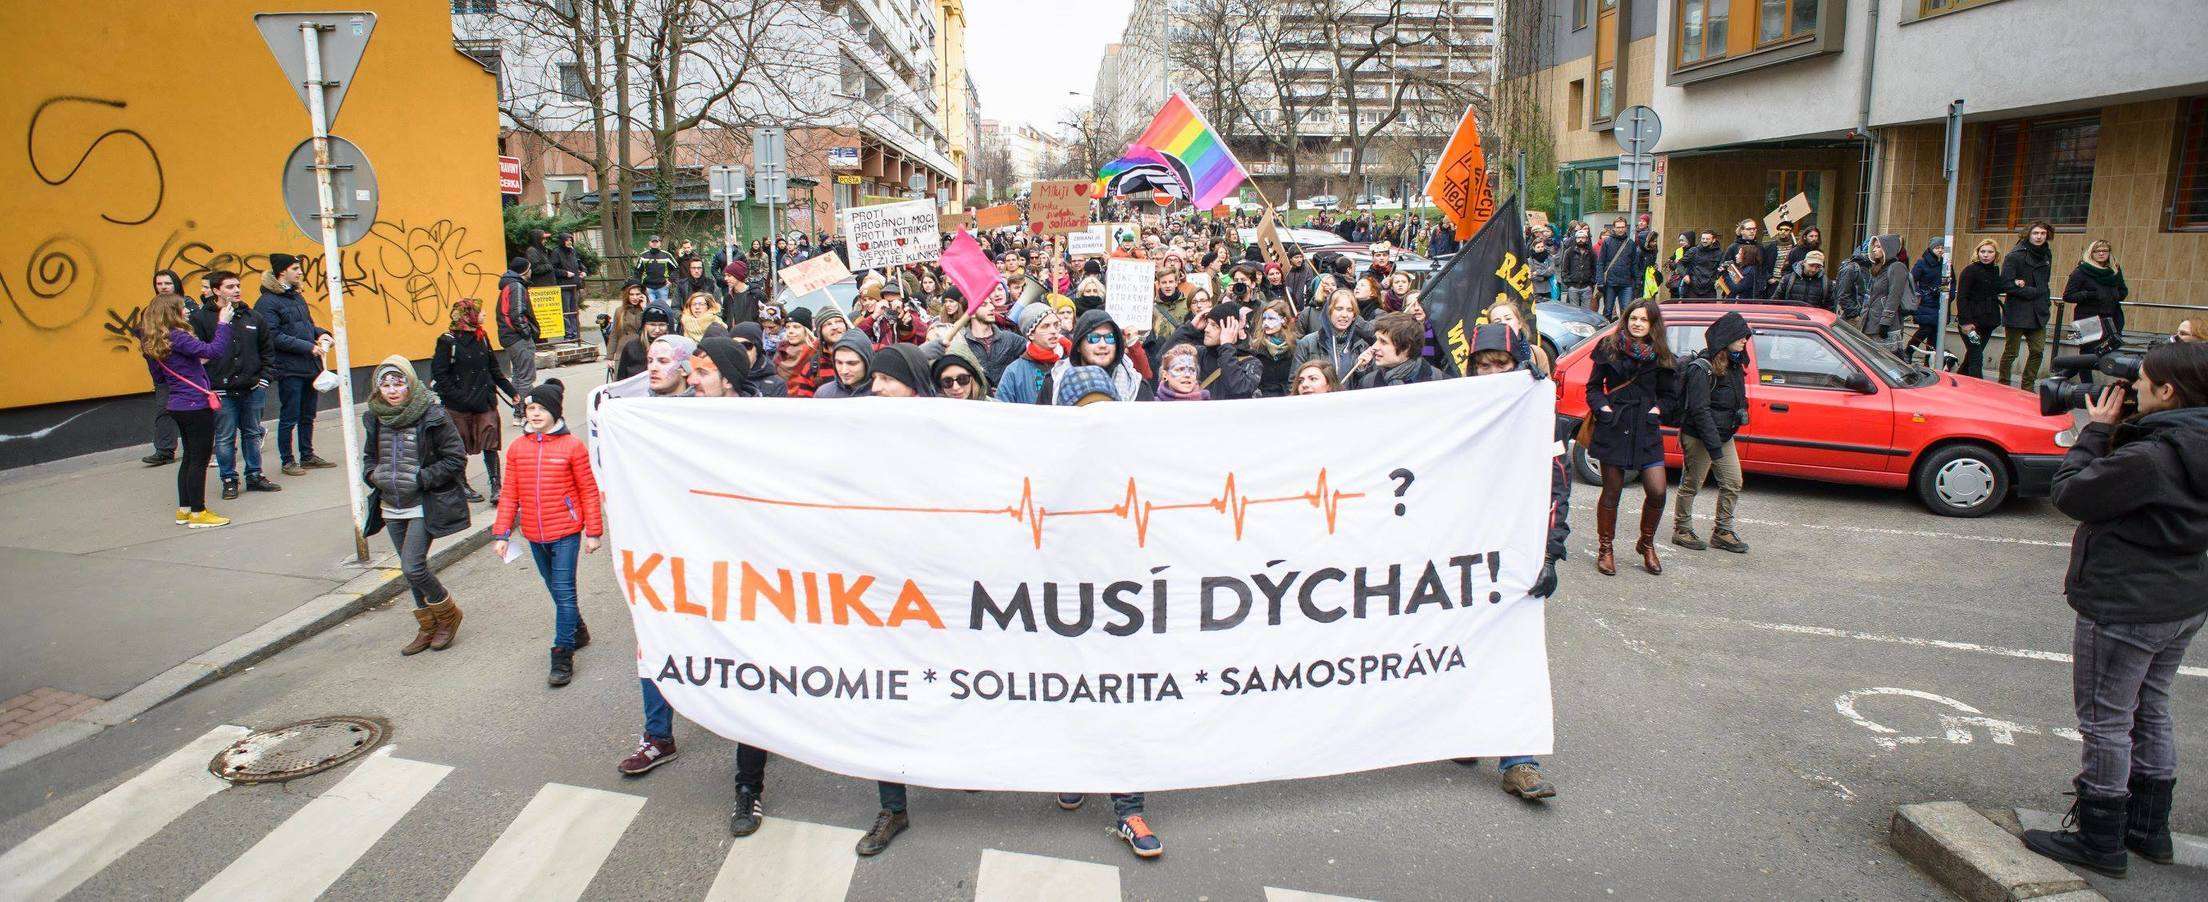 Prague: Klinika Social Center Under Threat of Eviction